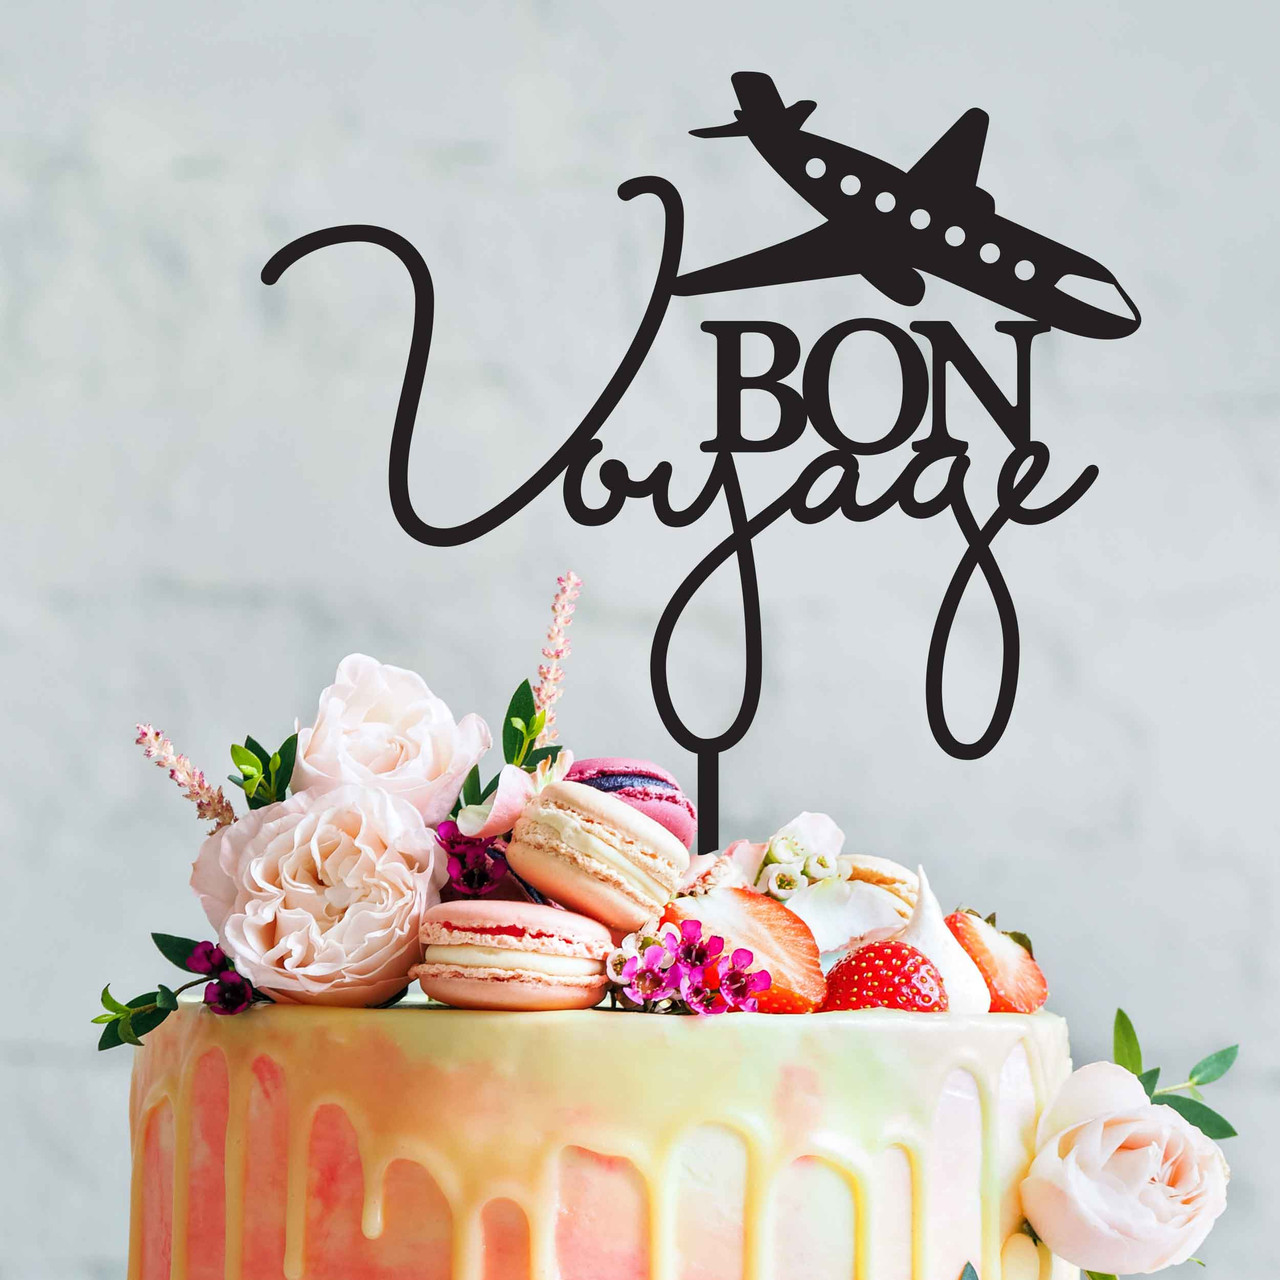 Bon Voyage - CakeCentral.com